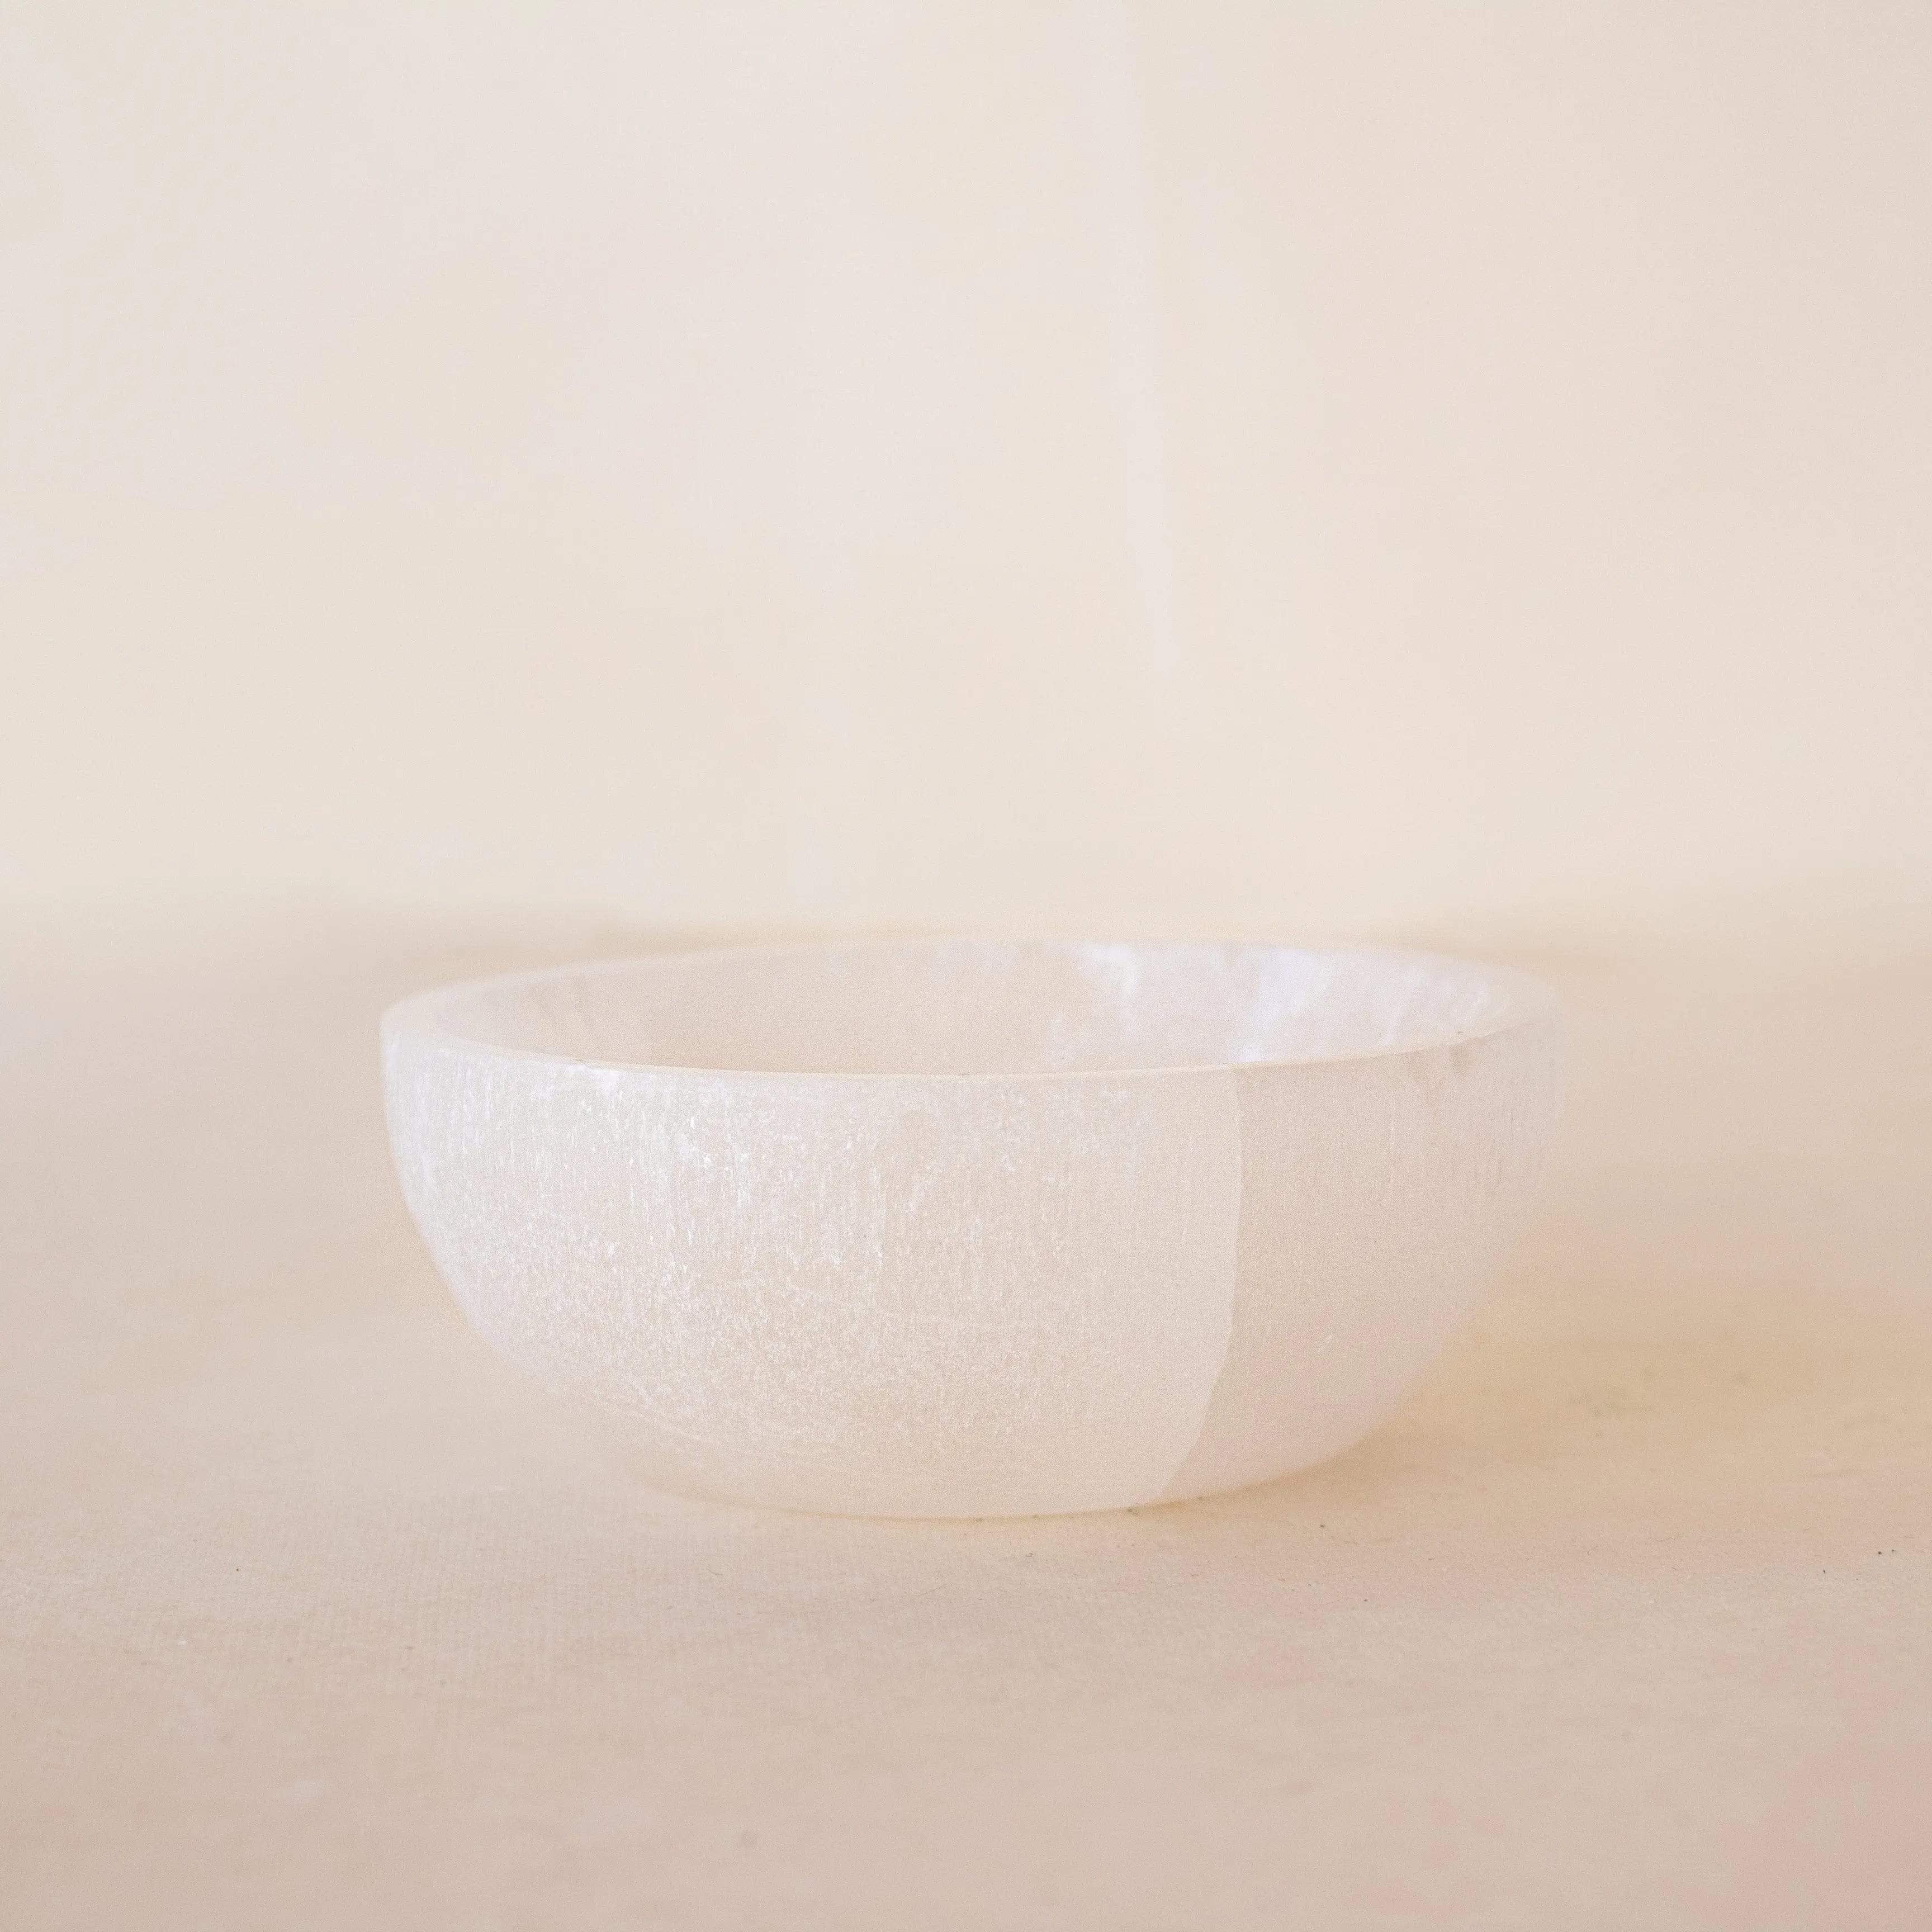 ANASCRYSTALCARE Selenite White Bowl